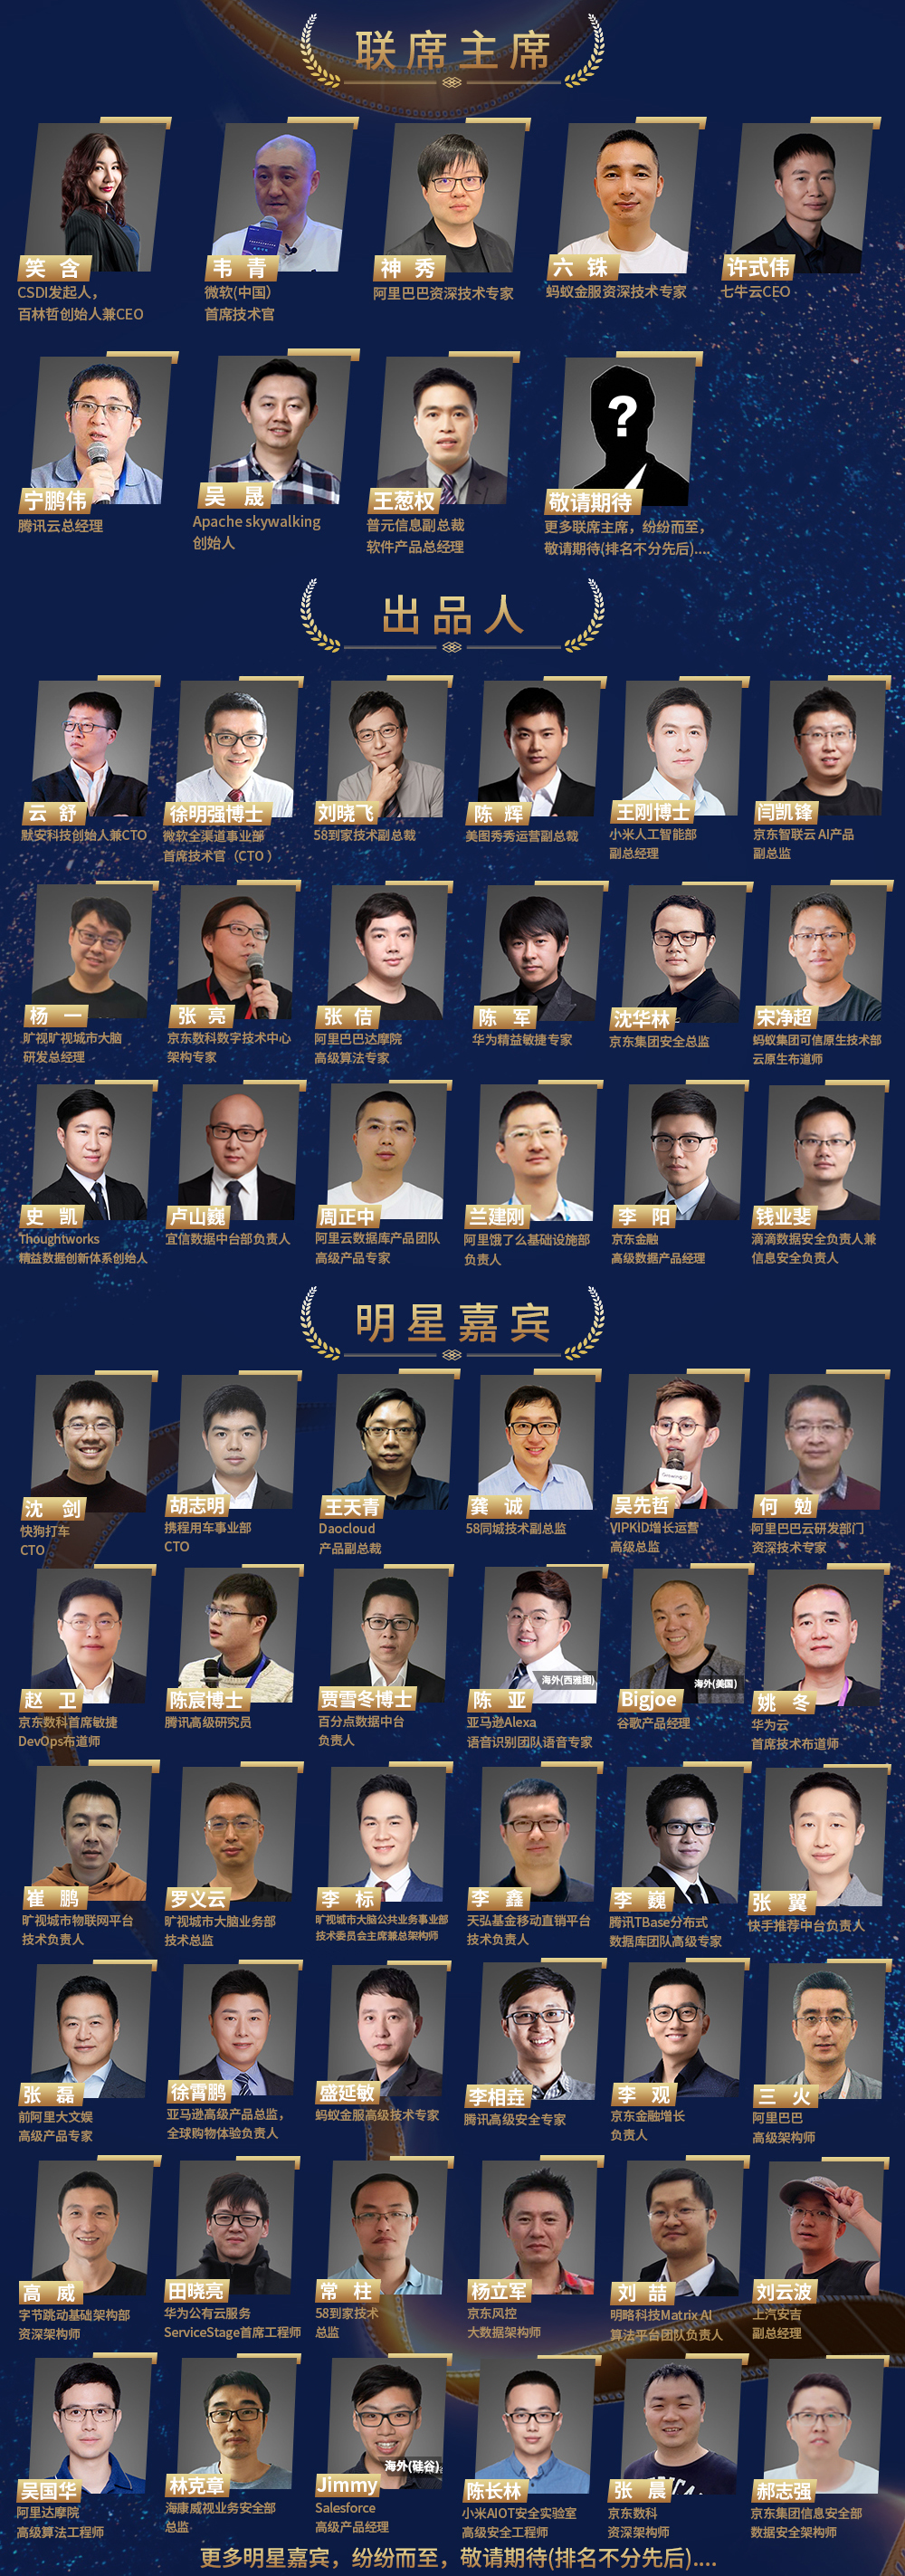 CSDI 2020中国软件研发管理行业技术峰会